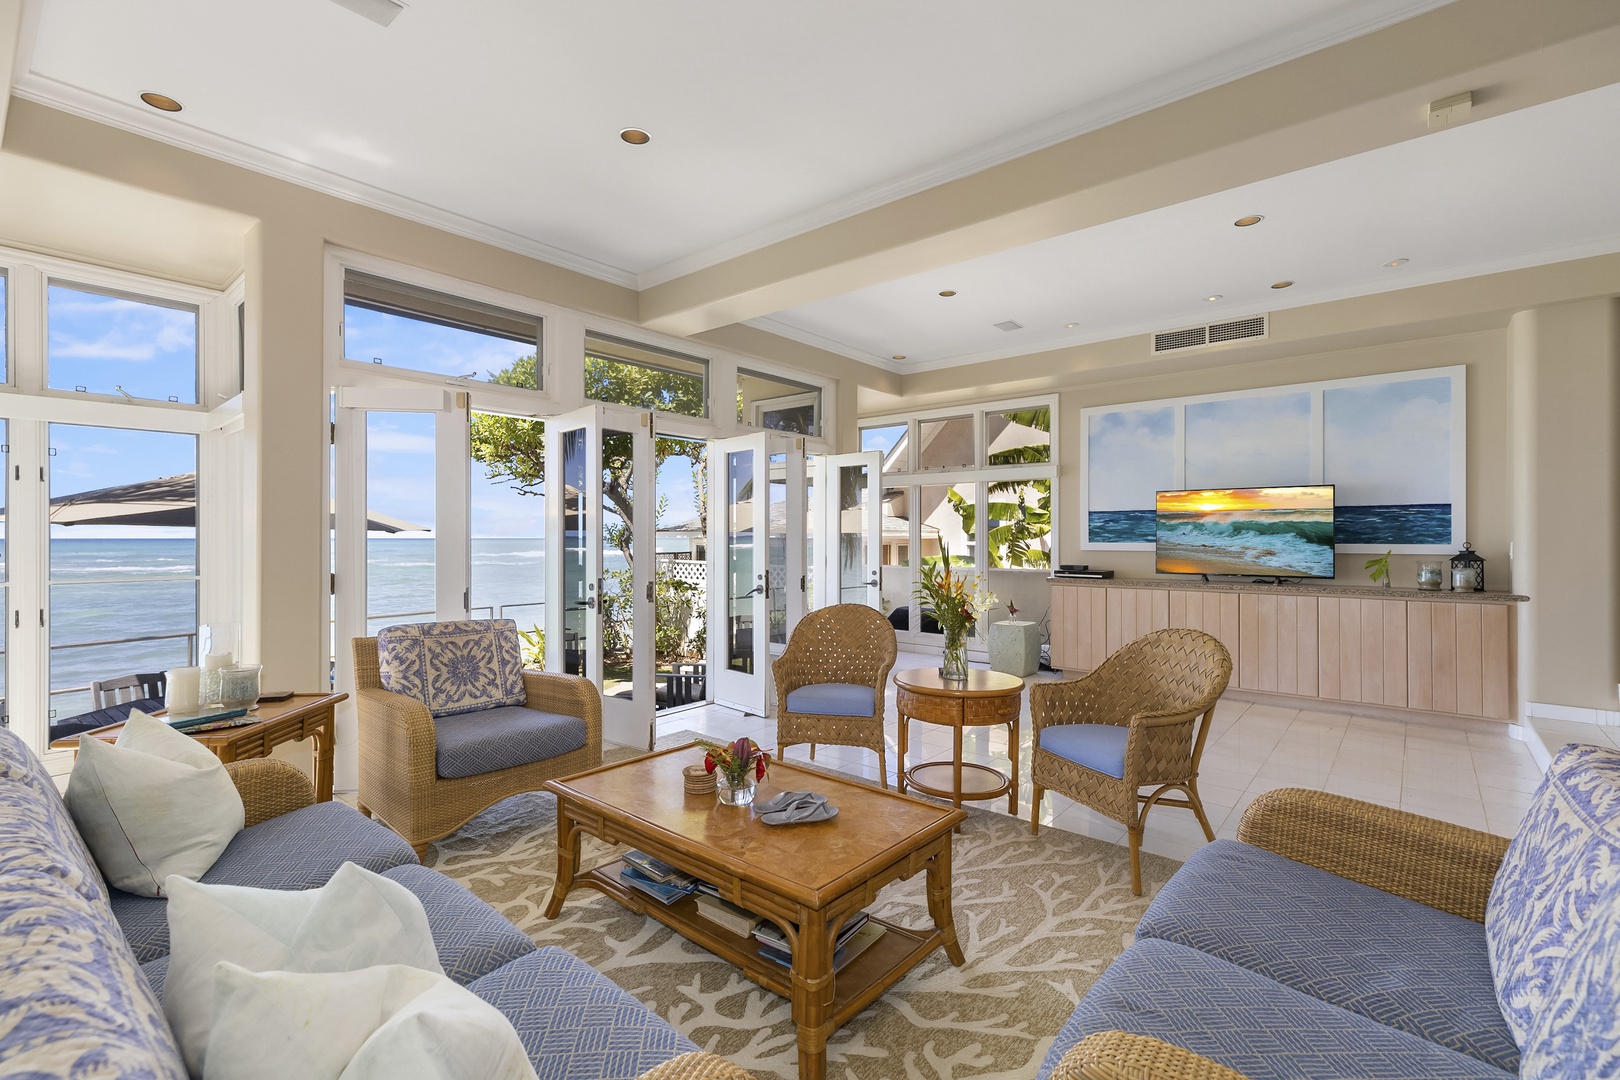 Honolulu Vacation Rentals, Diamond Head Surf House - Living Room area, looking makai (toward the ocean)